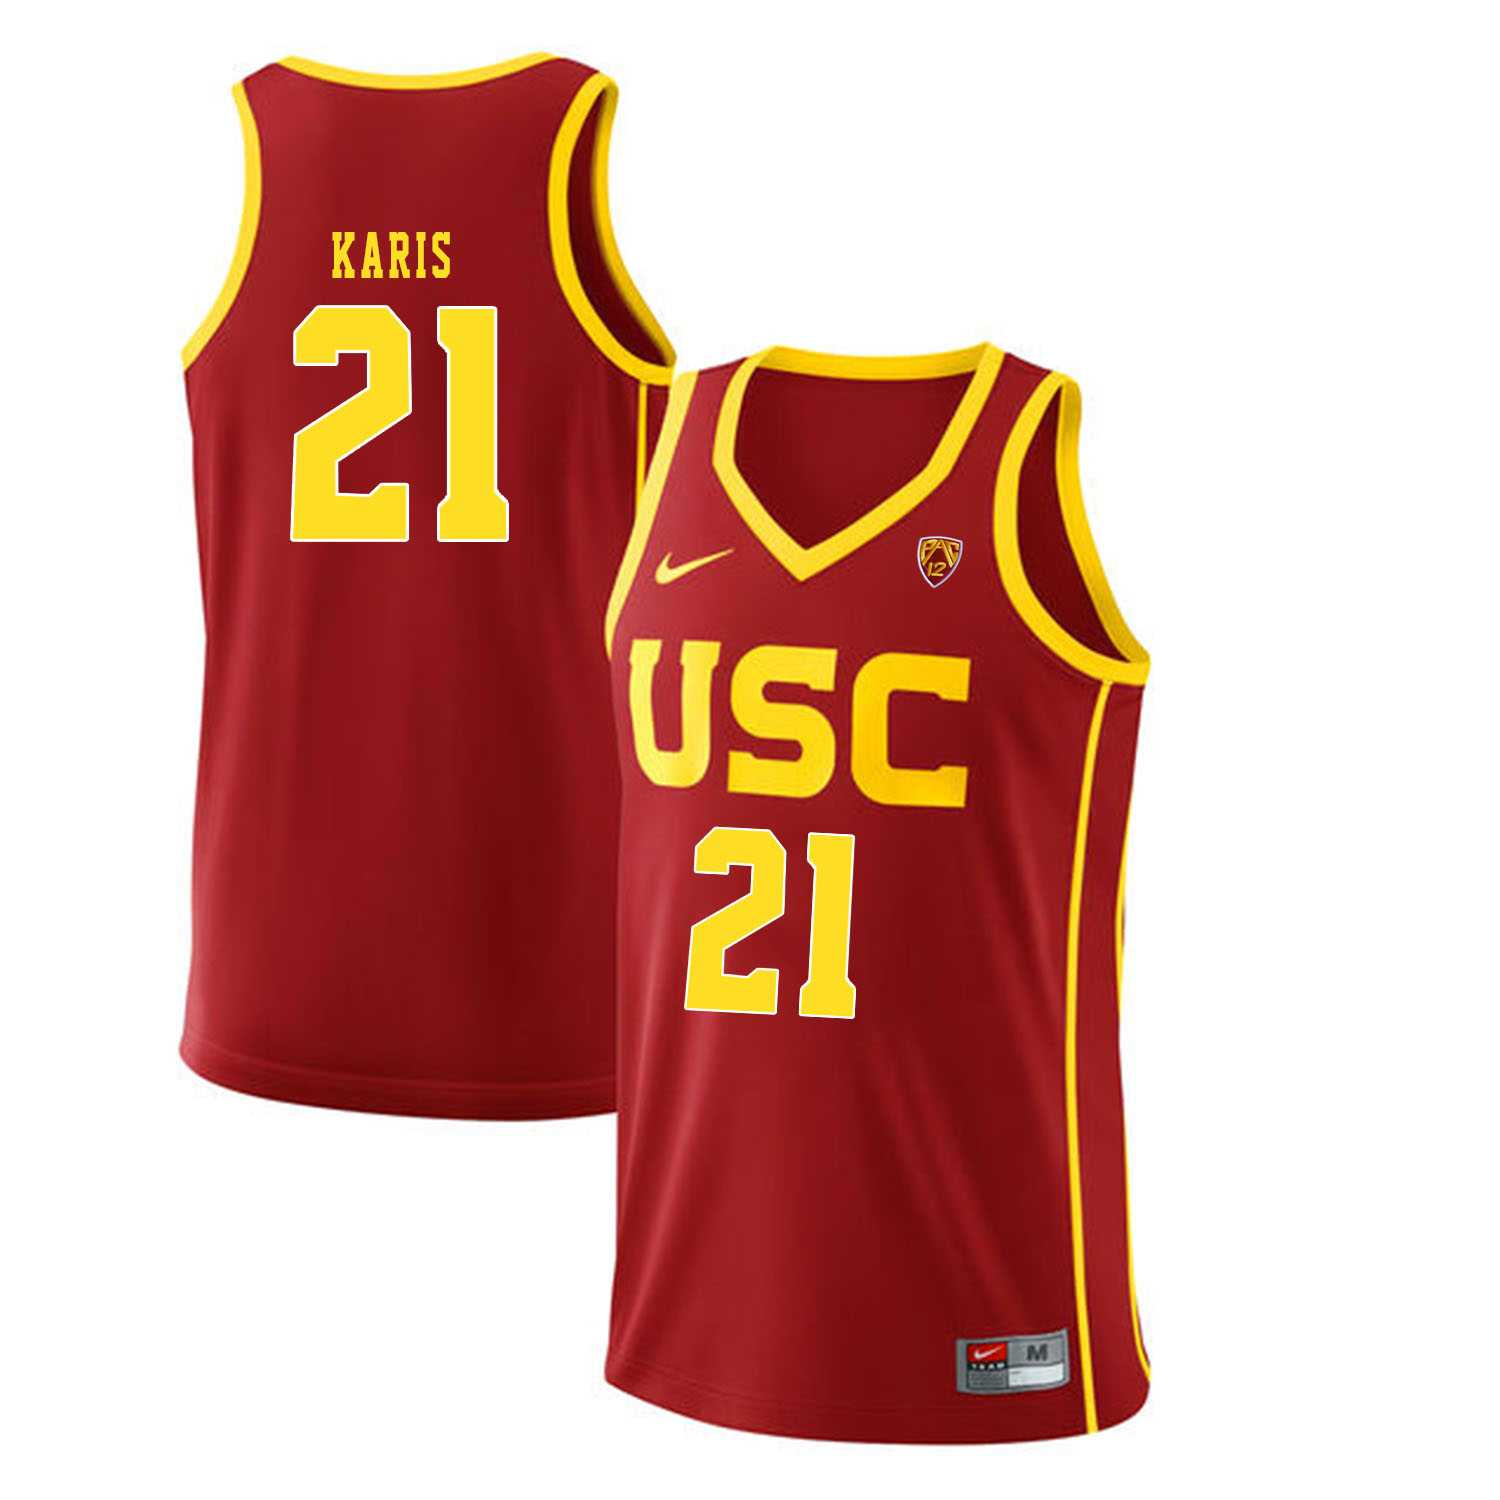 USC Trojans #21 Kurt Karis Red College Basketball Jersey